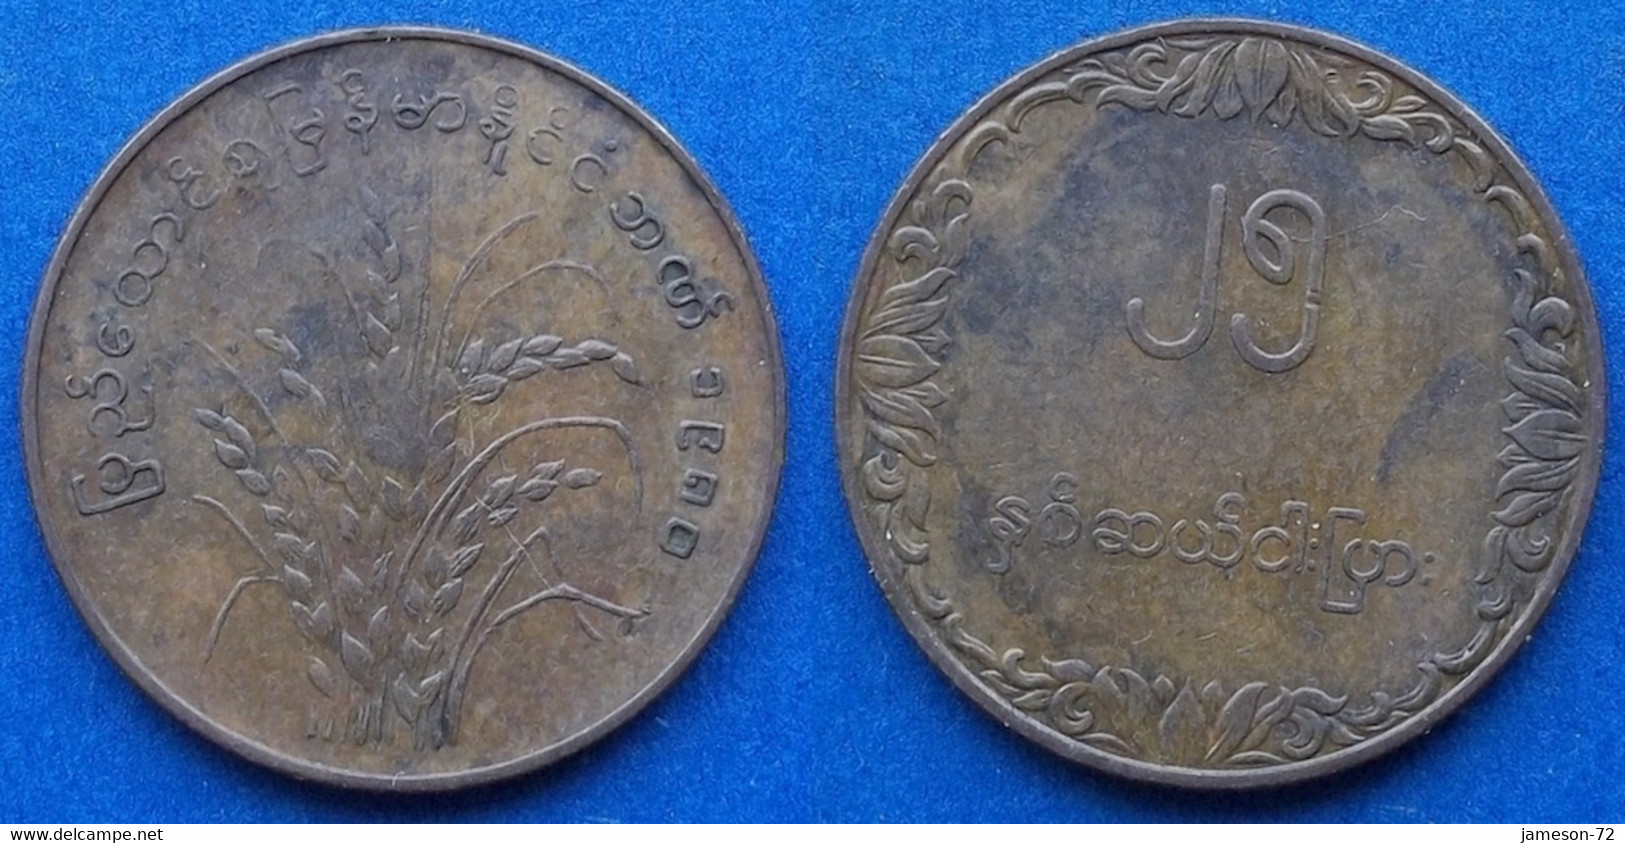 BURMA - 25 Pyas 1980 KM# 48 Republic (1948-1989) - Edelweiss Coins - Myanmar